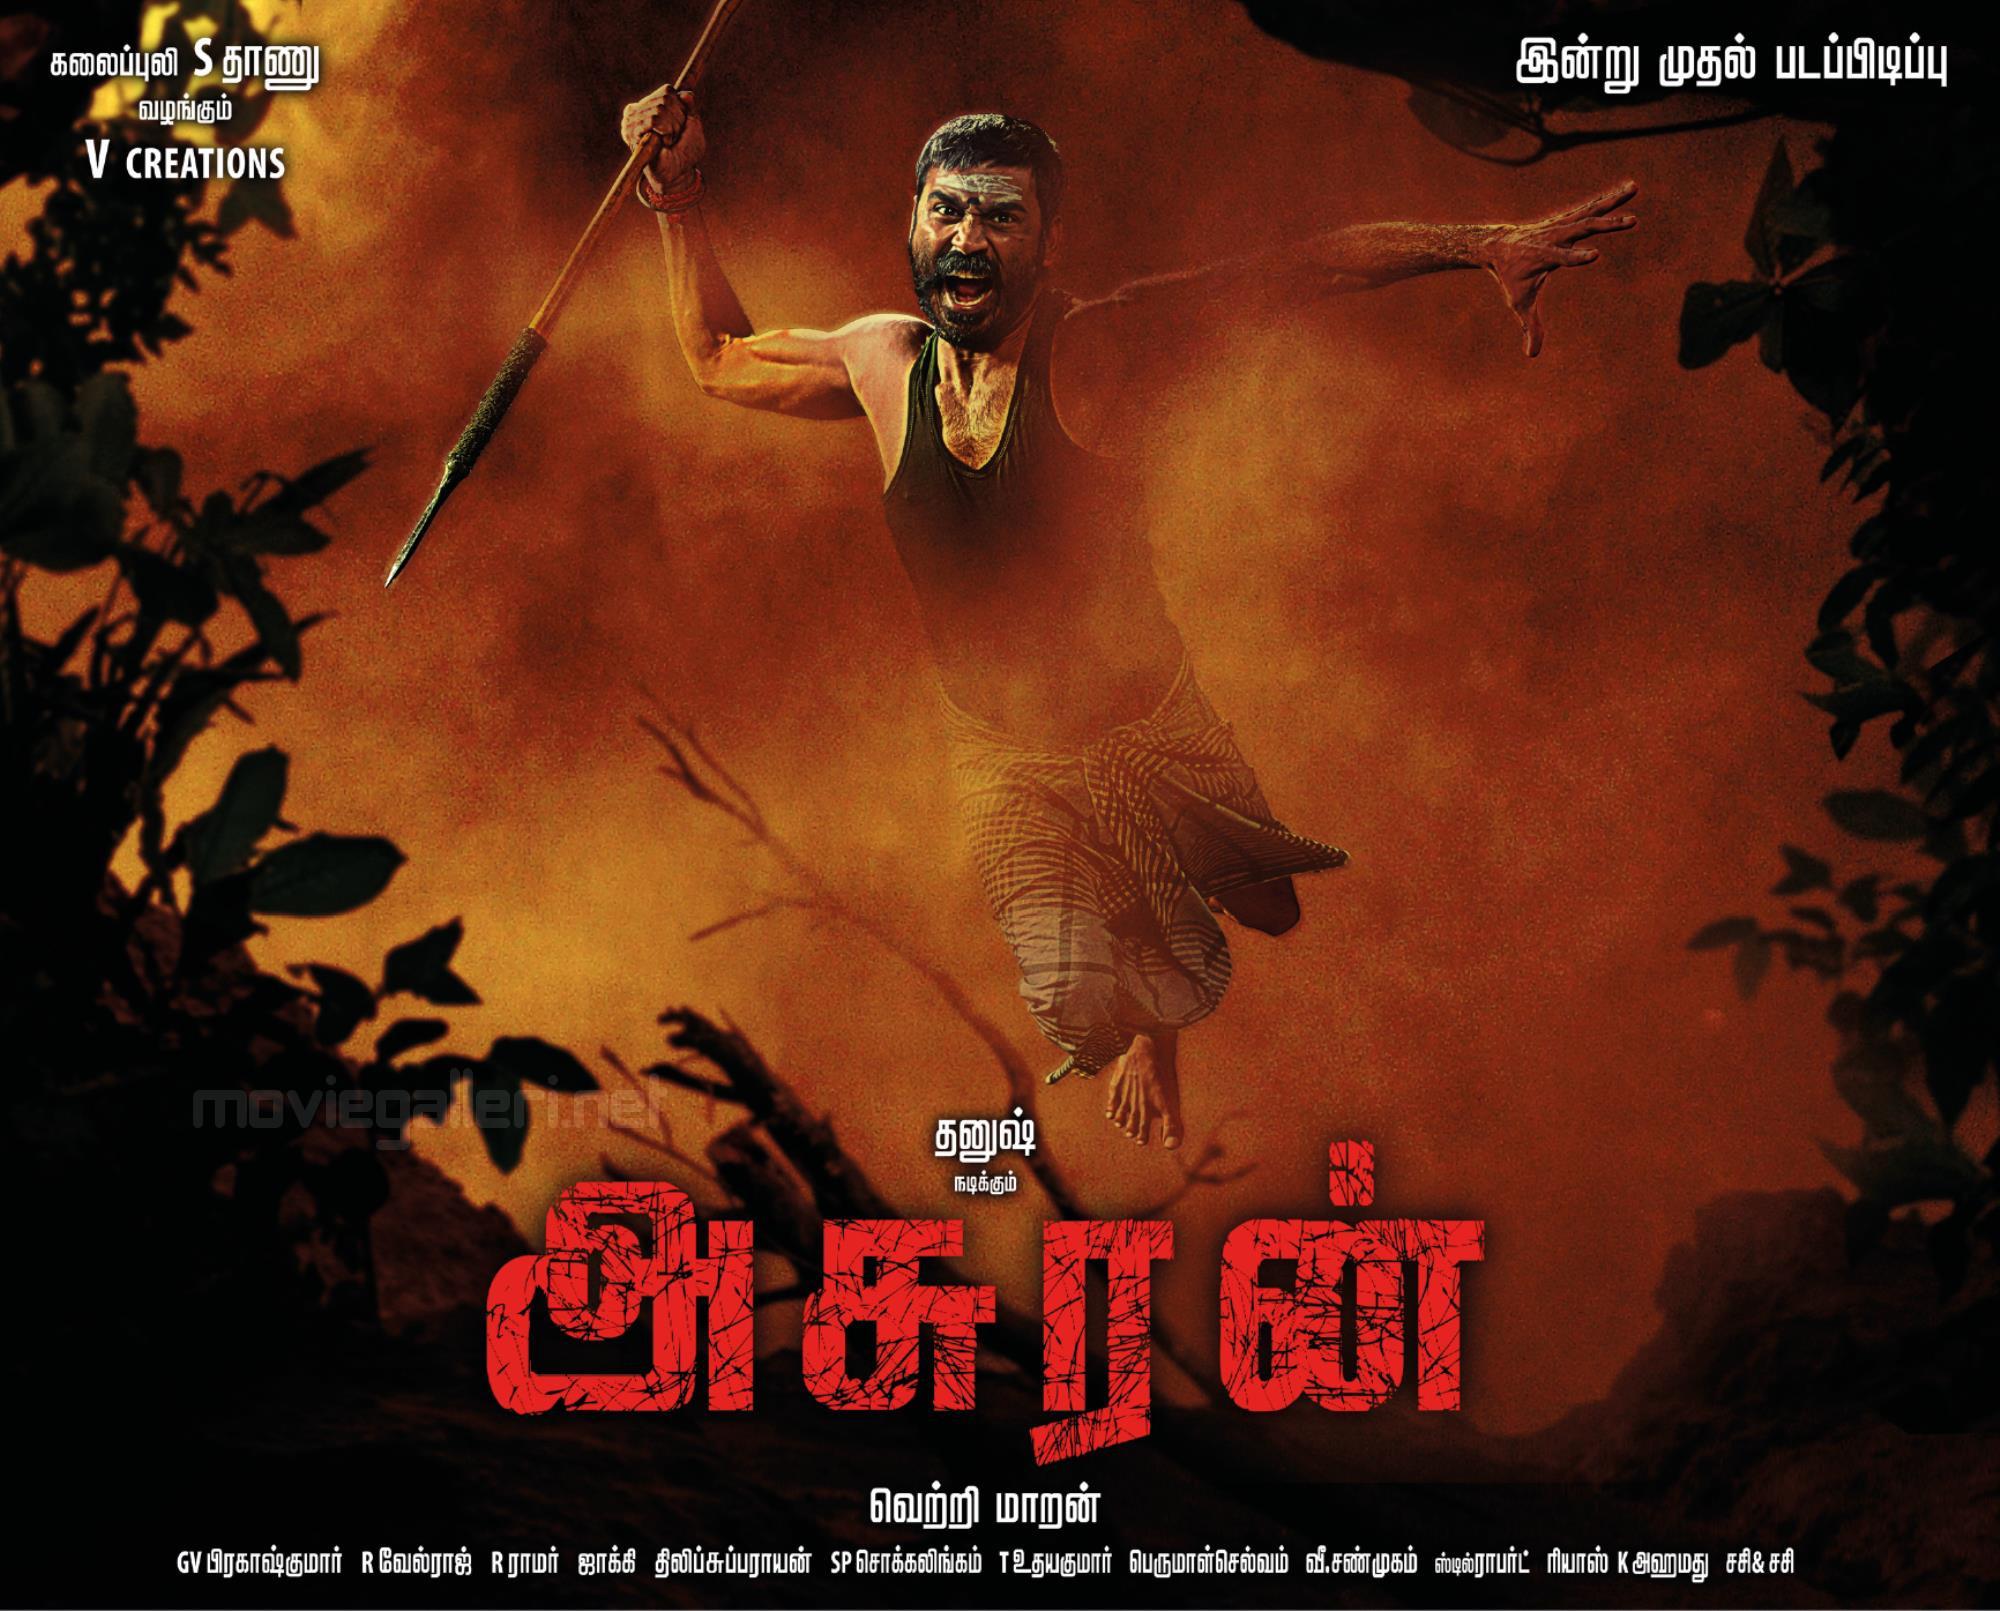 Manju Warrier. Dhanush. Asuran Shooting Starts Today Poster. New Movie Posters